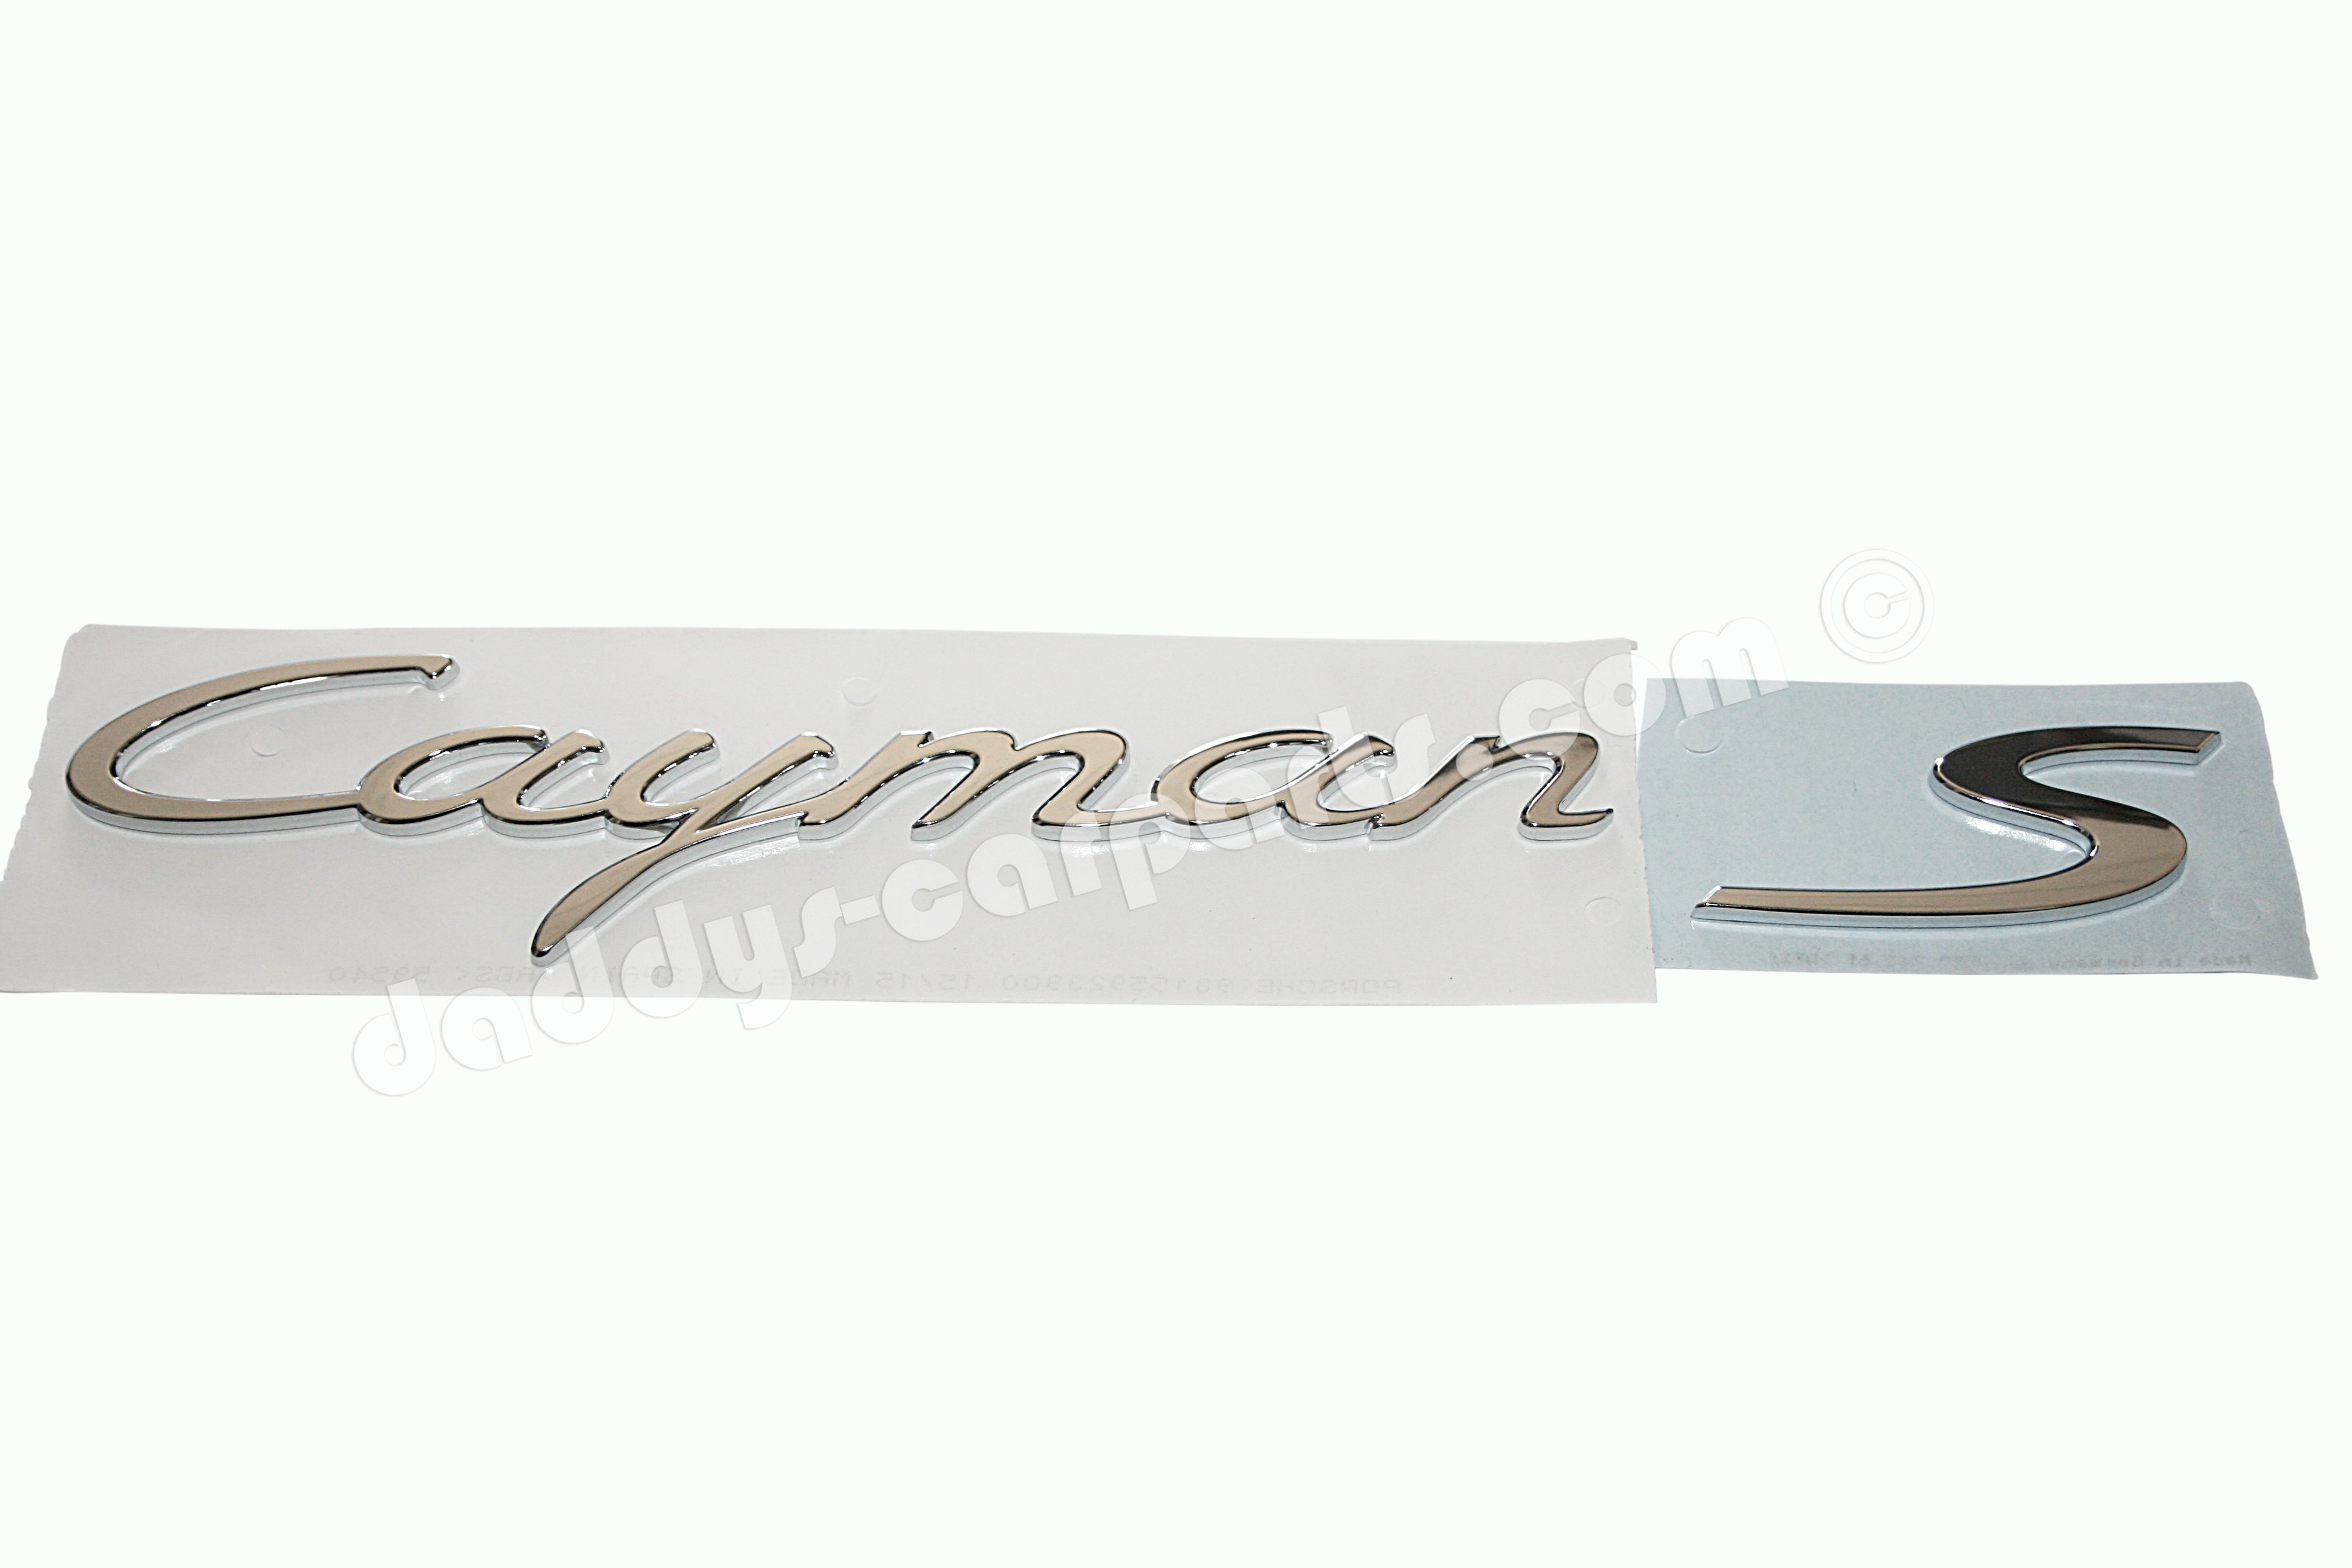 CAYMAN S BADGE CHROME FOR PORSCHE 981